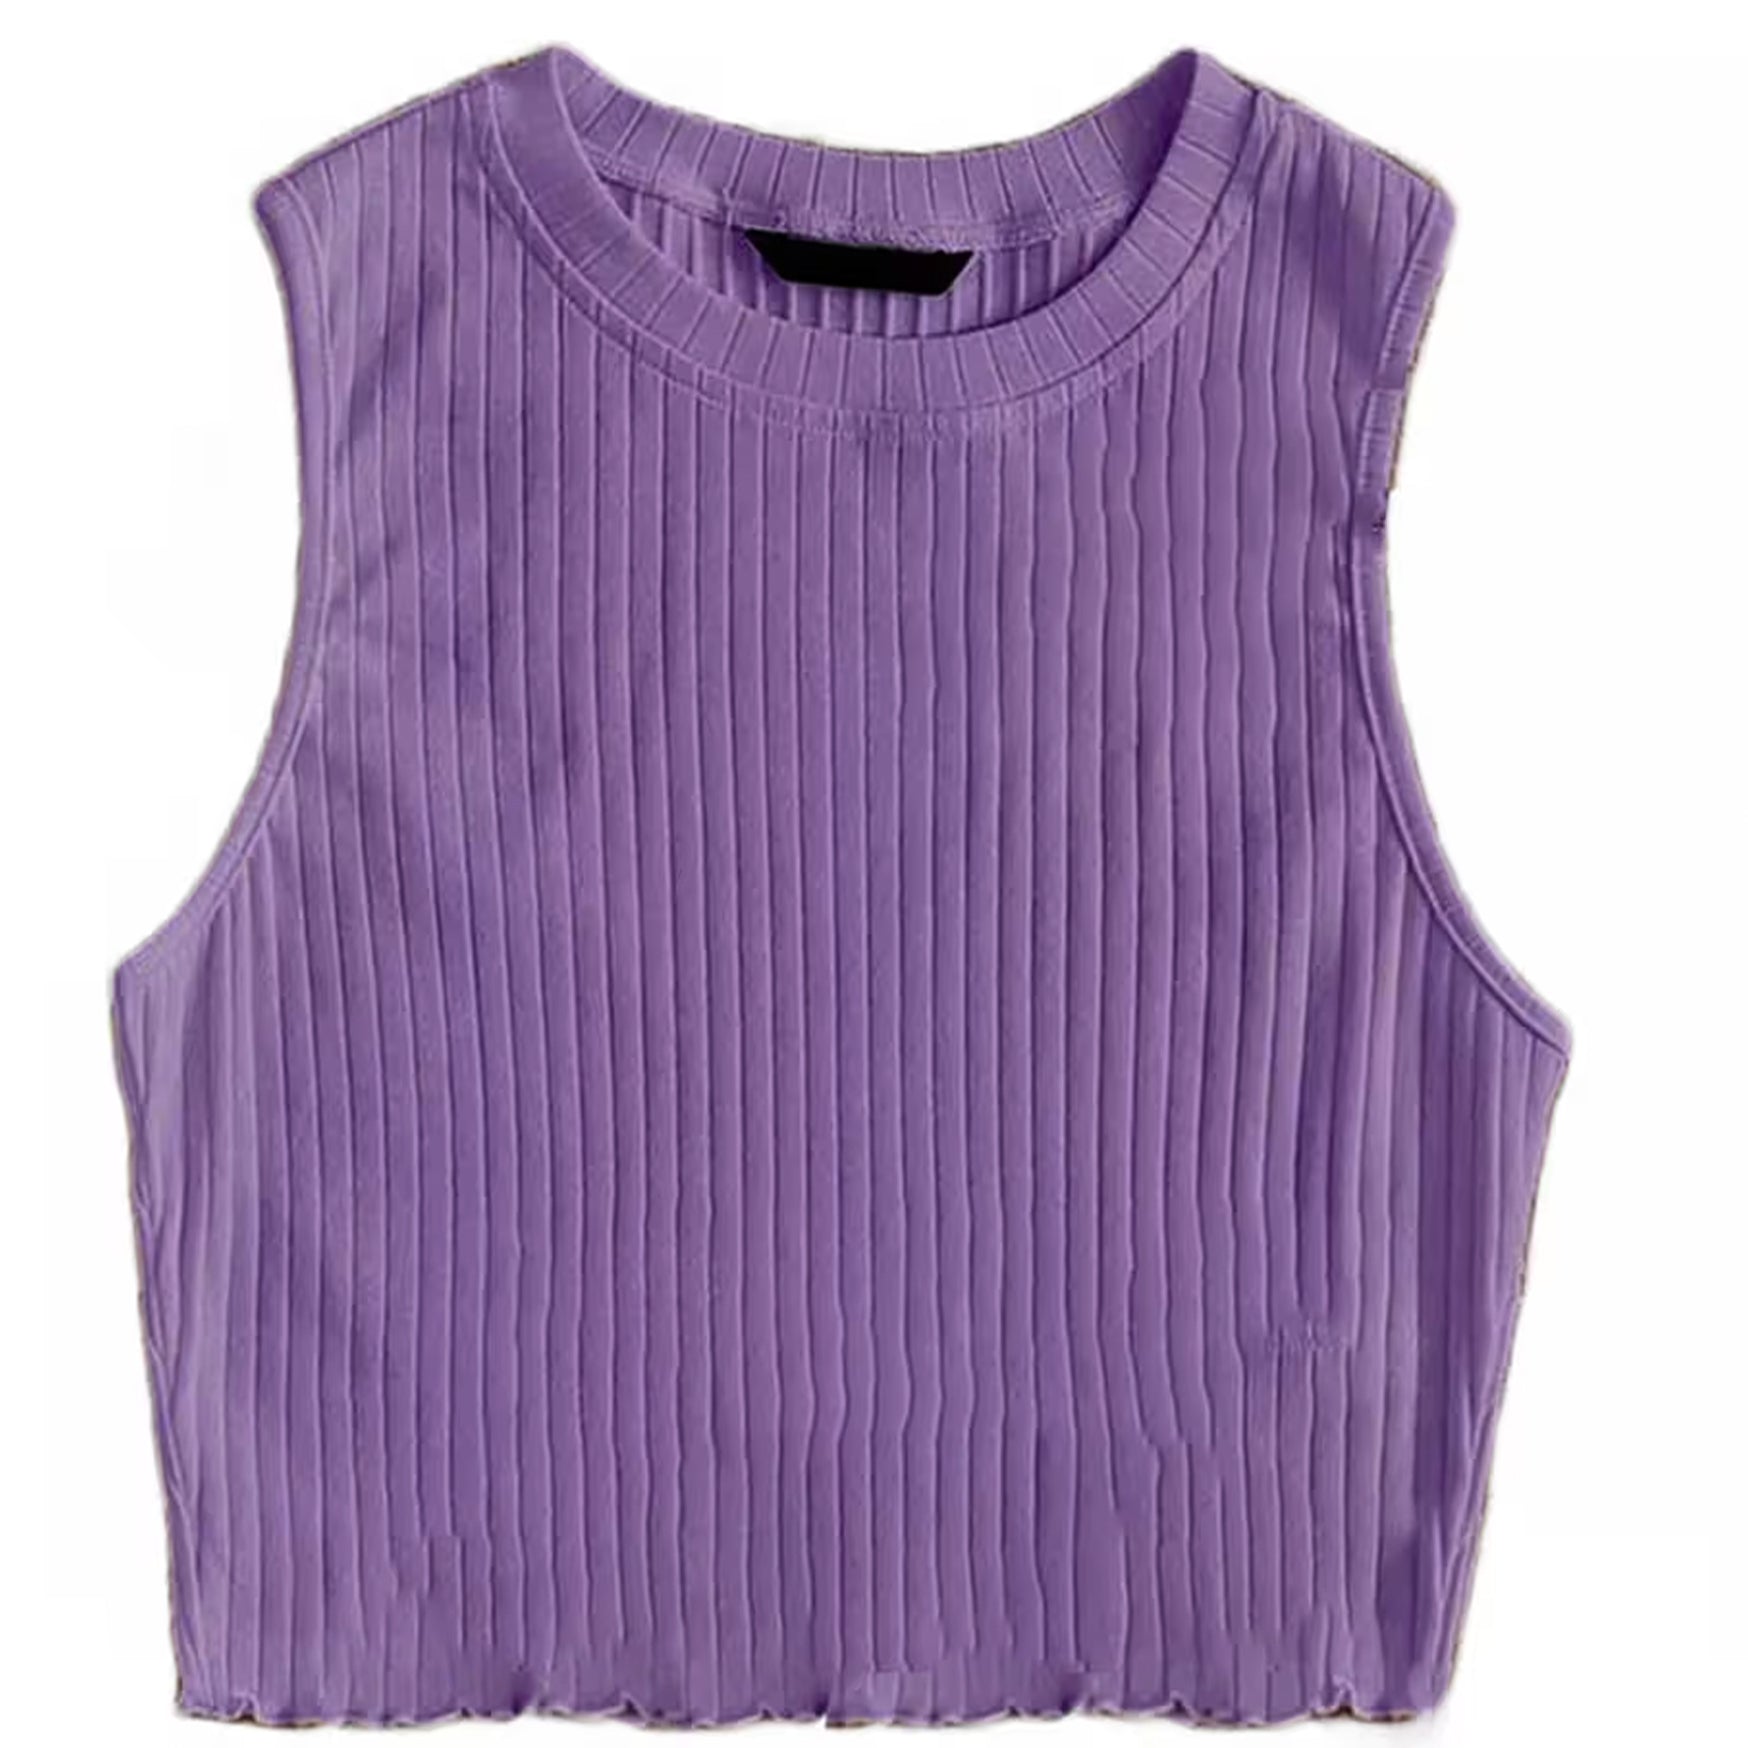 Khhalisi Rib Crop Purple Top for Women (S)